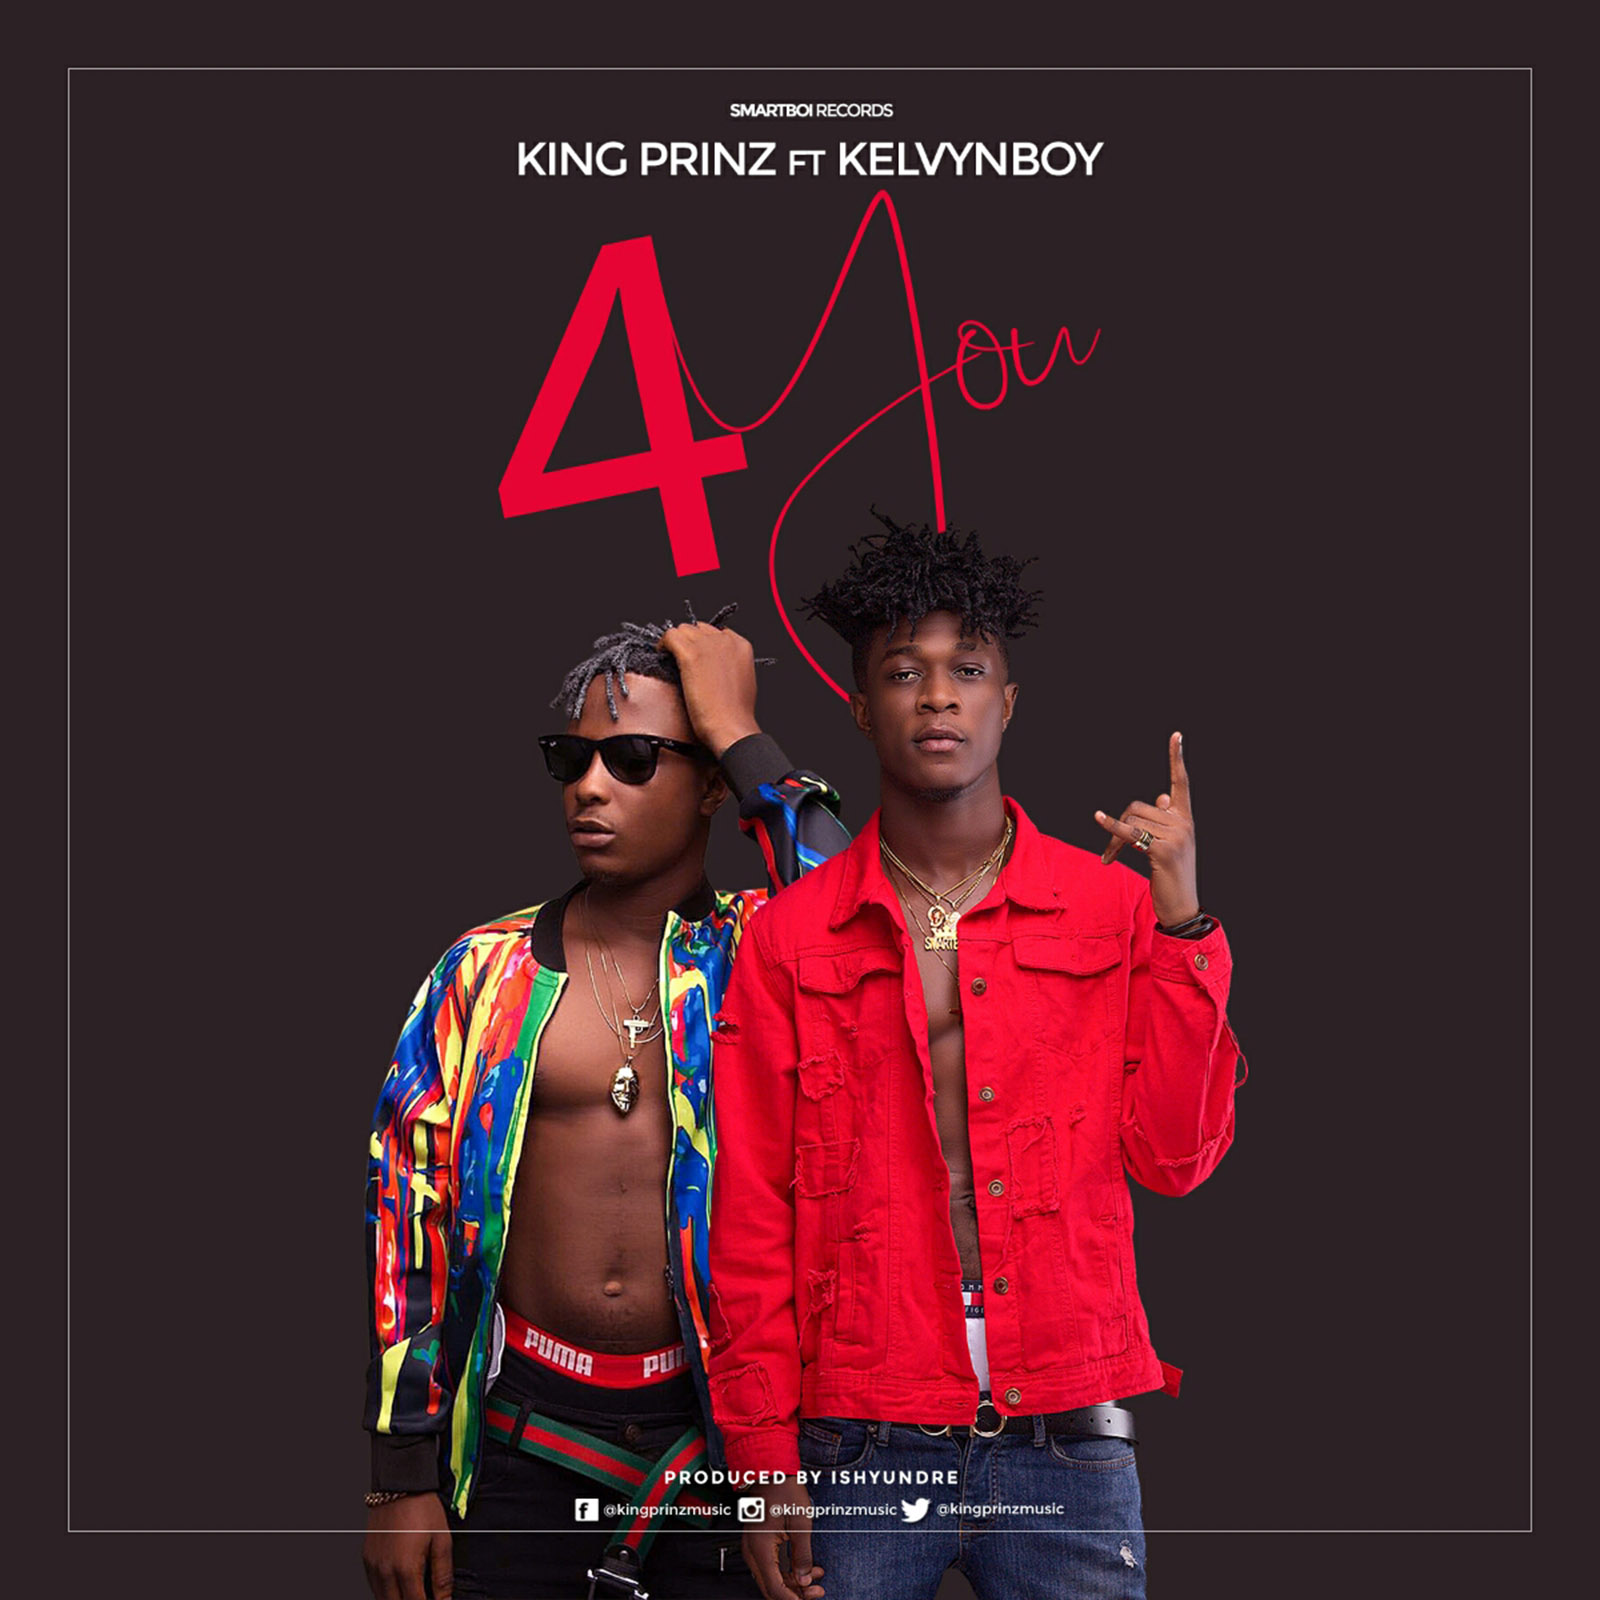 4 You by King Prinz feat. Kelvynboy